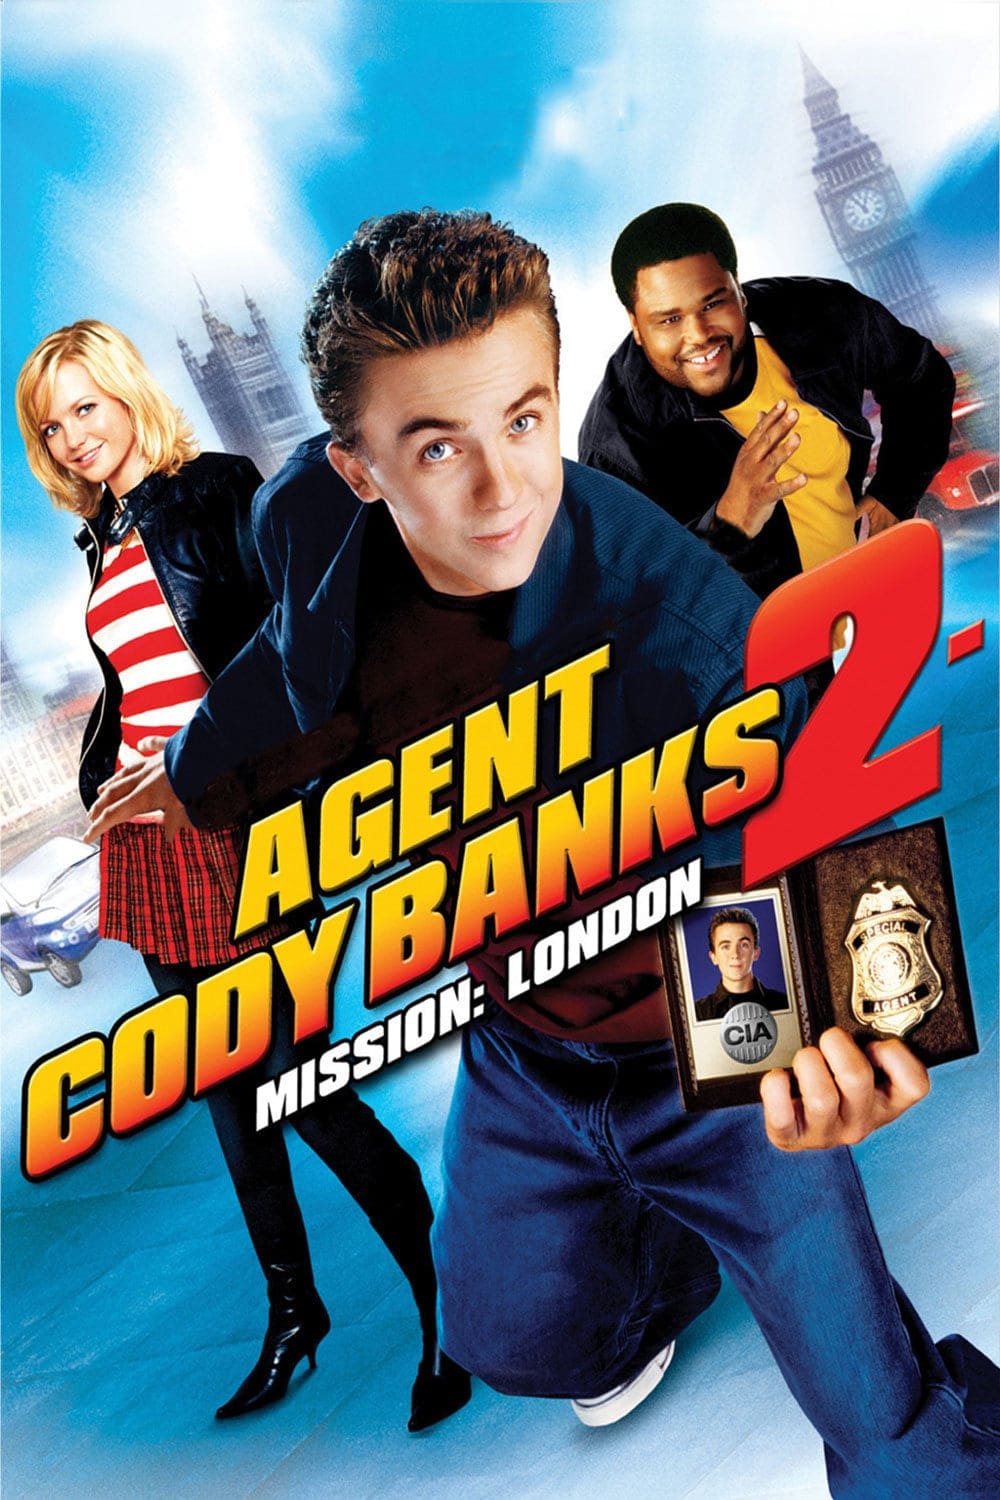 Plakat von "Agent Cody Banks 2: Mission London"